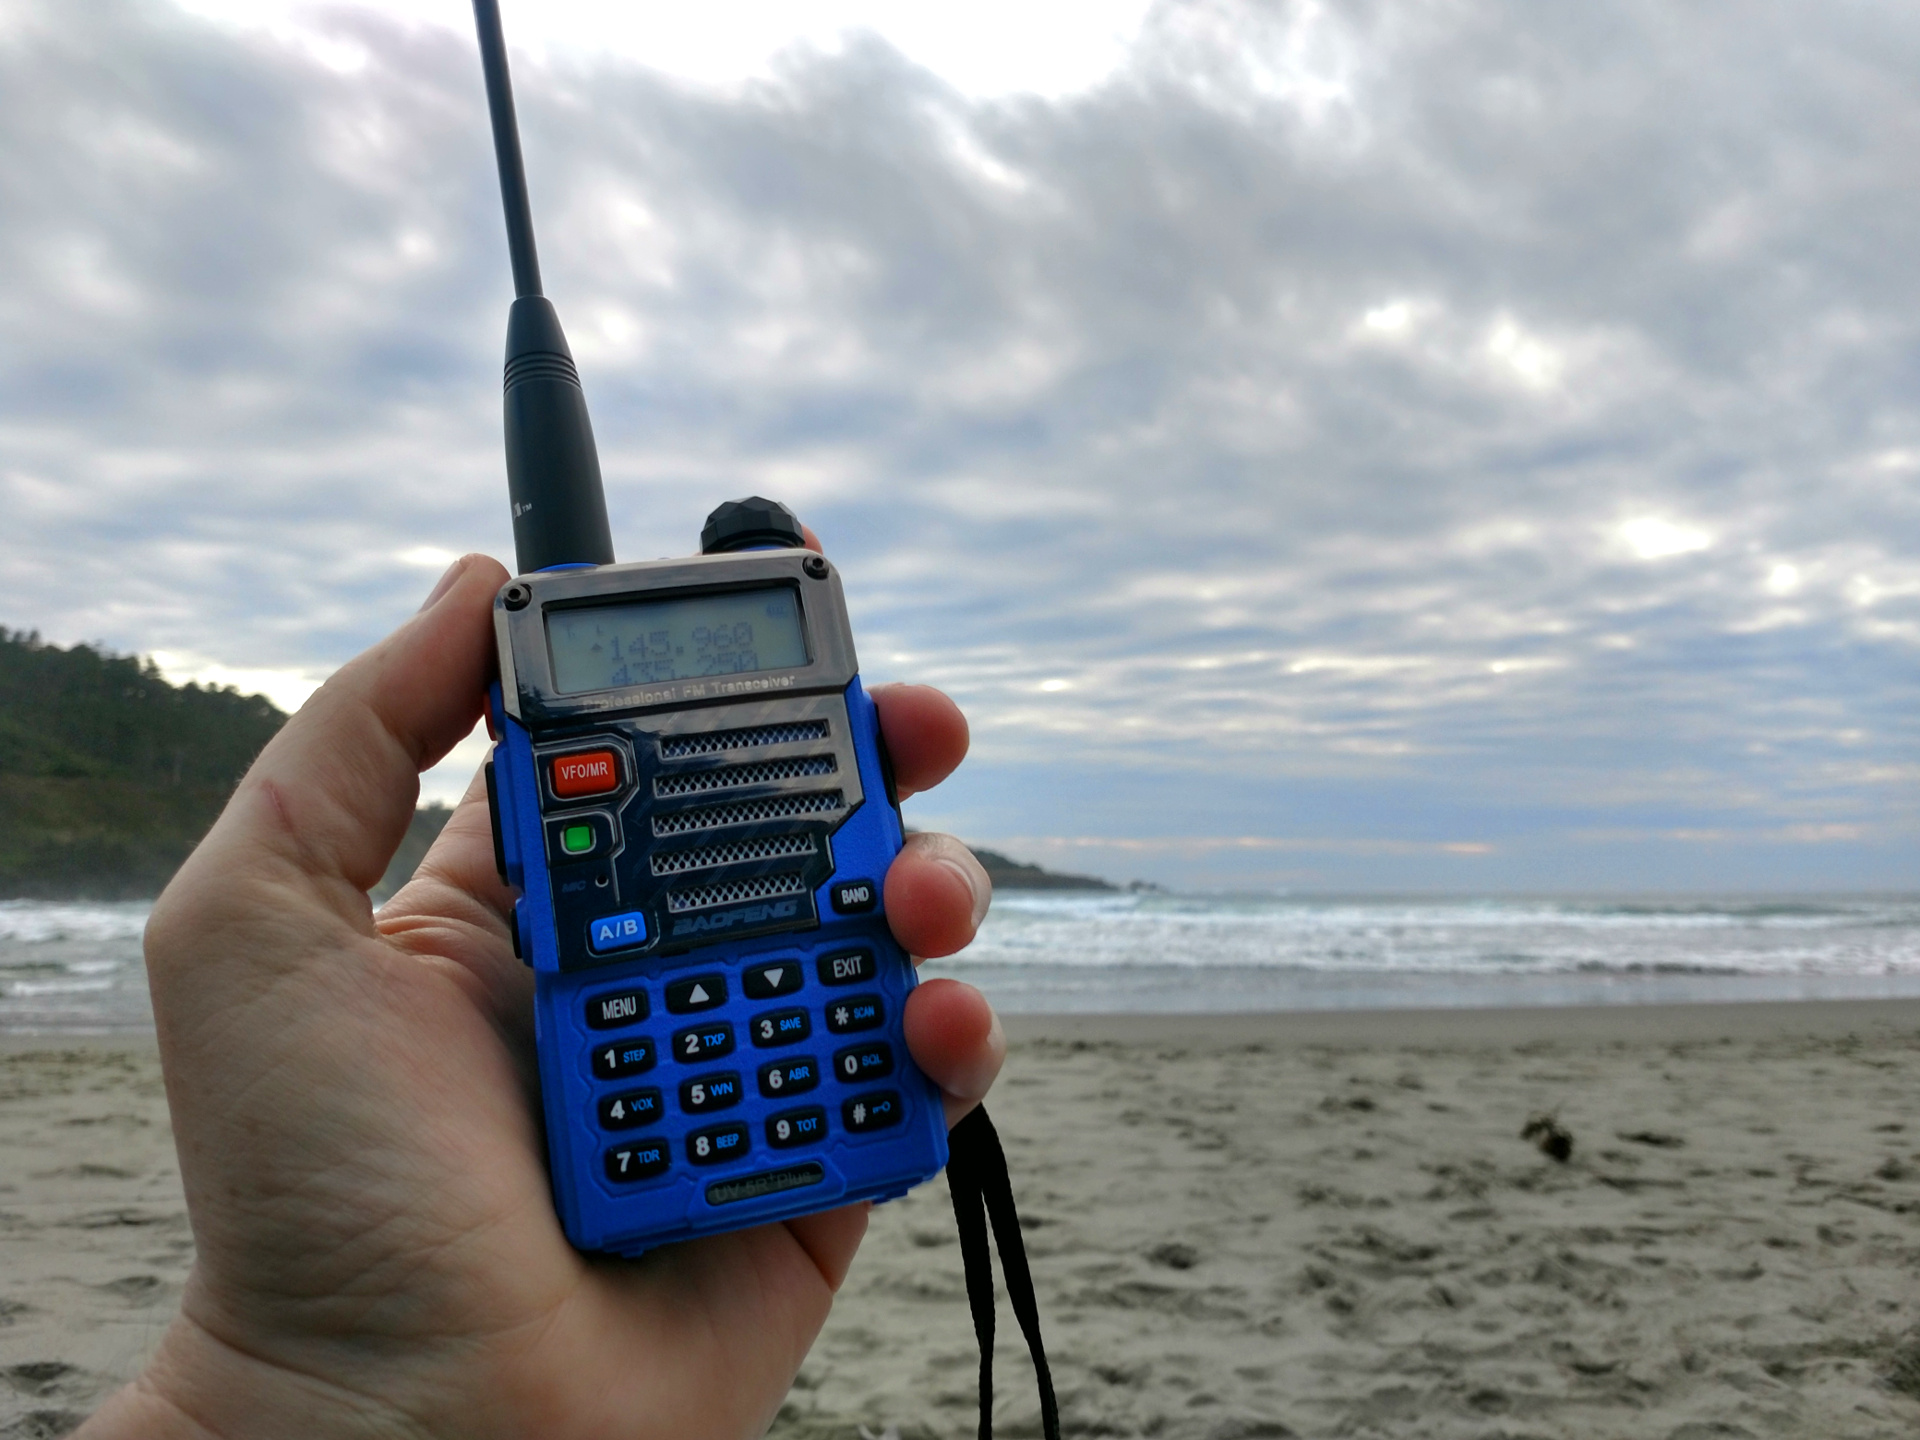 Using a Baofeng Handheld Transceiver to work Amateur Radio Satellites (AMSAT)